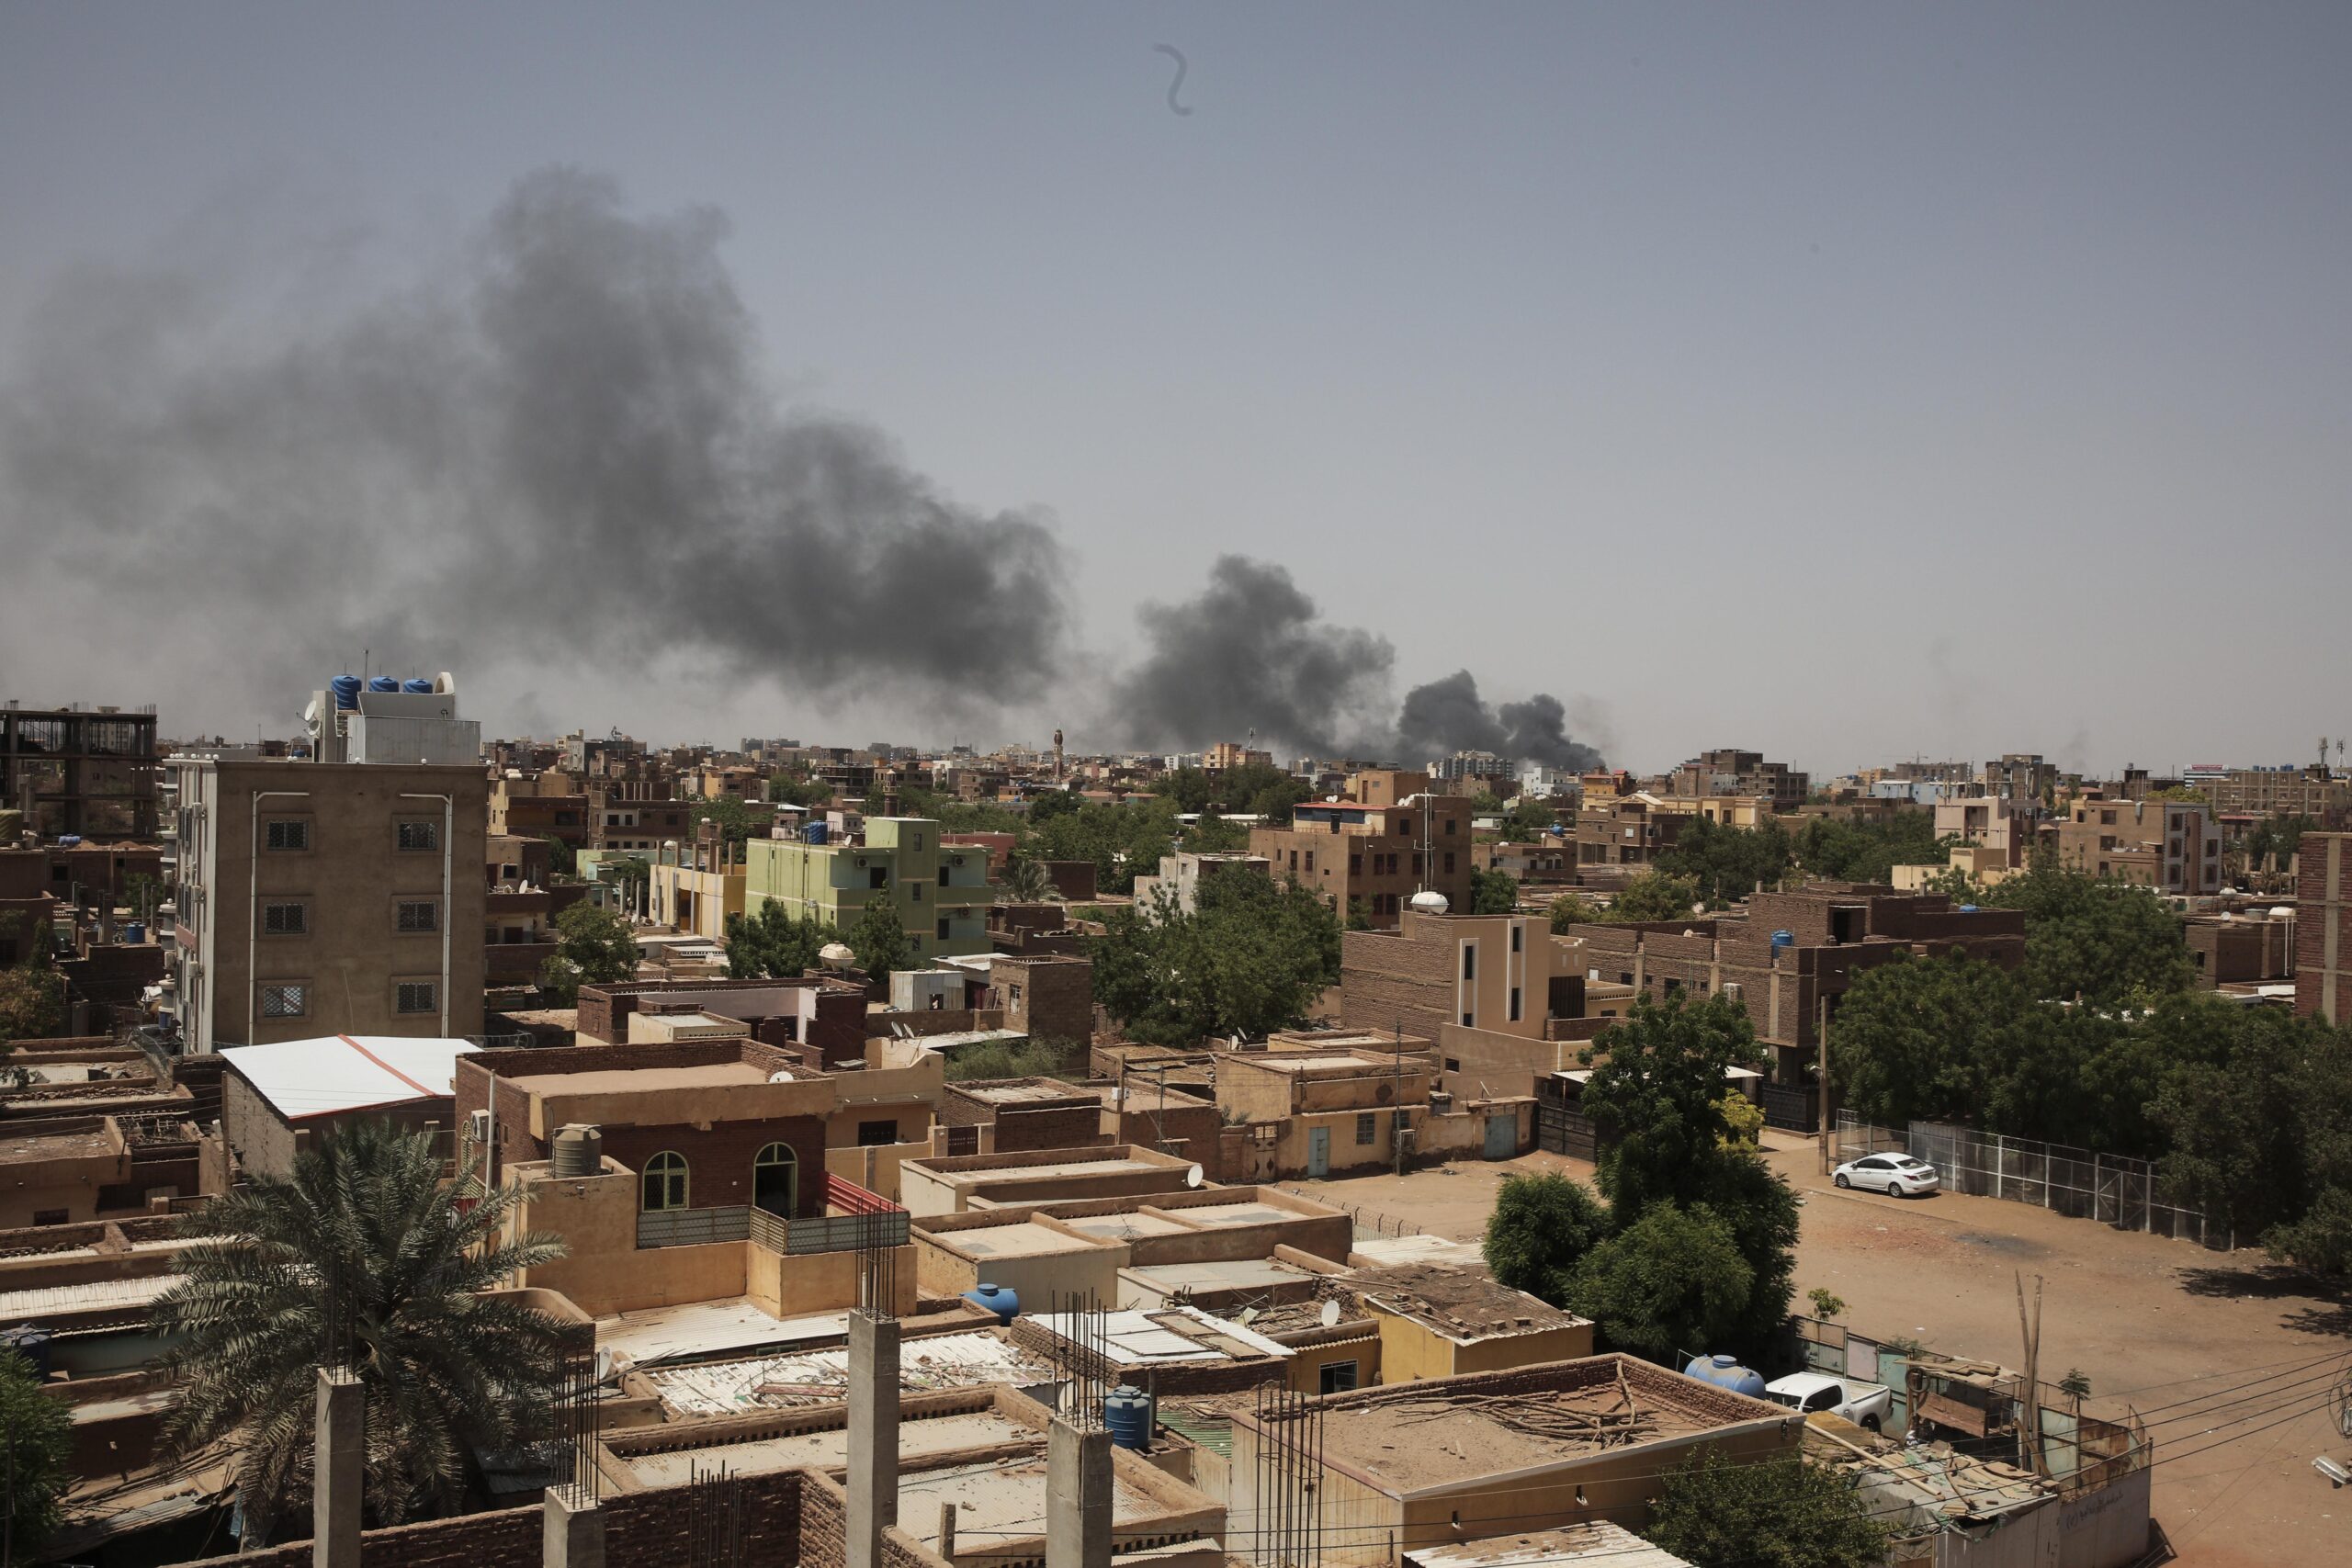 UN: Heavy fighting in Sudan’s capital, children caught in crisis